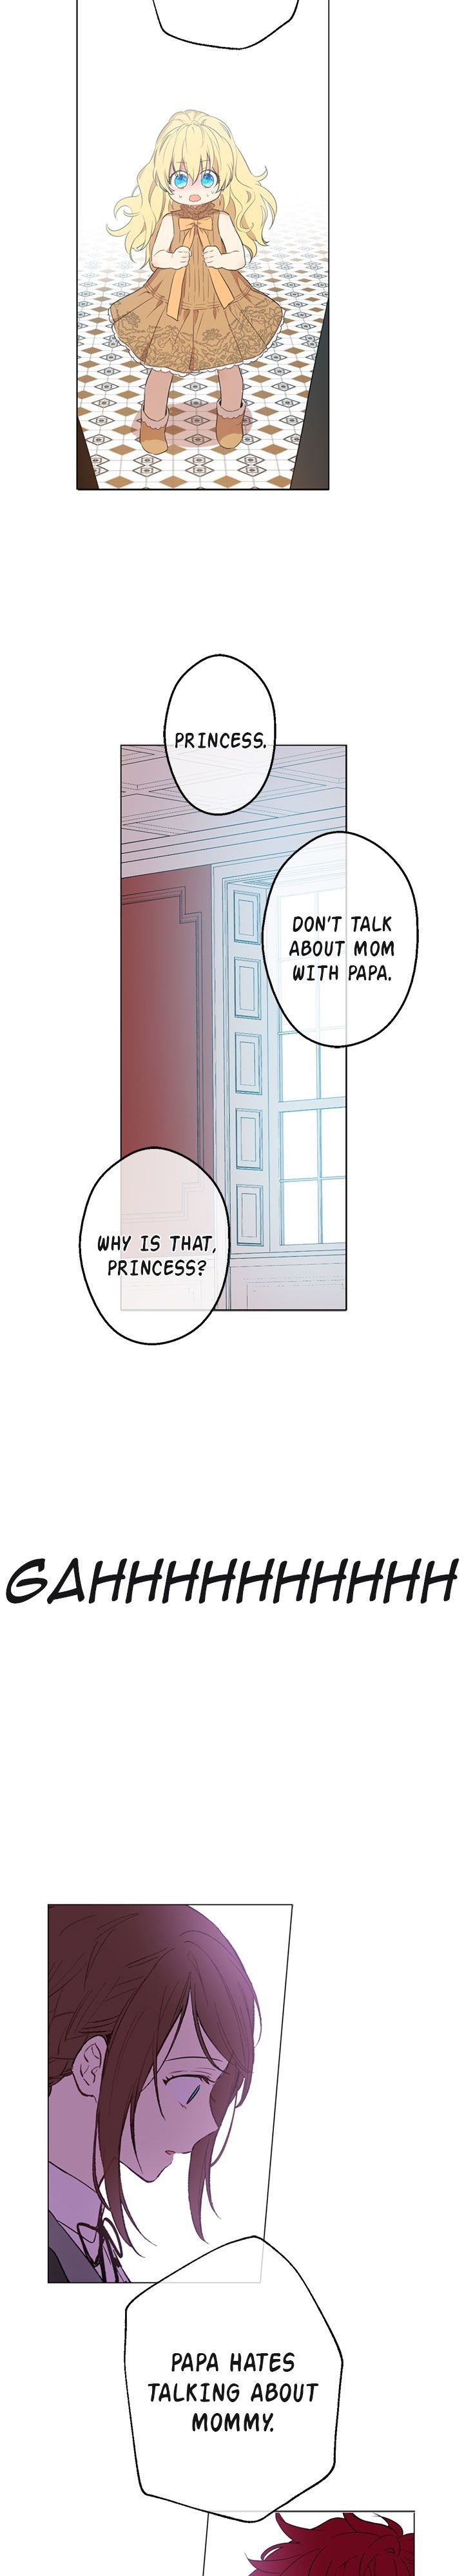 Who Made Me a Princess - Chapter 14 Page 8